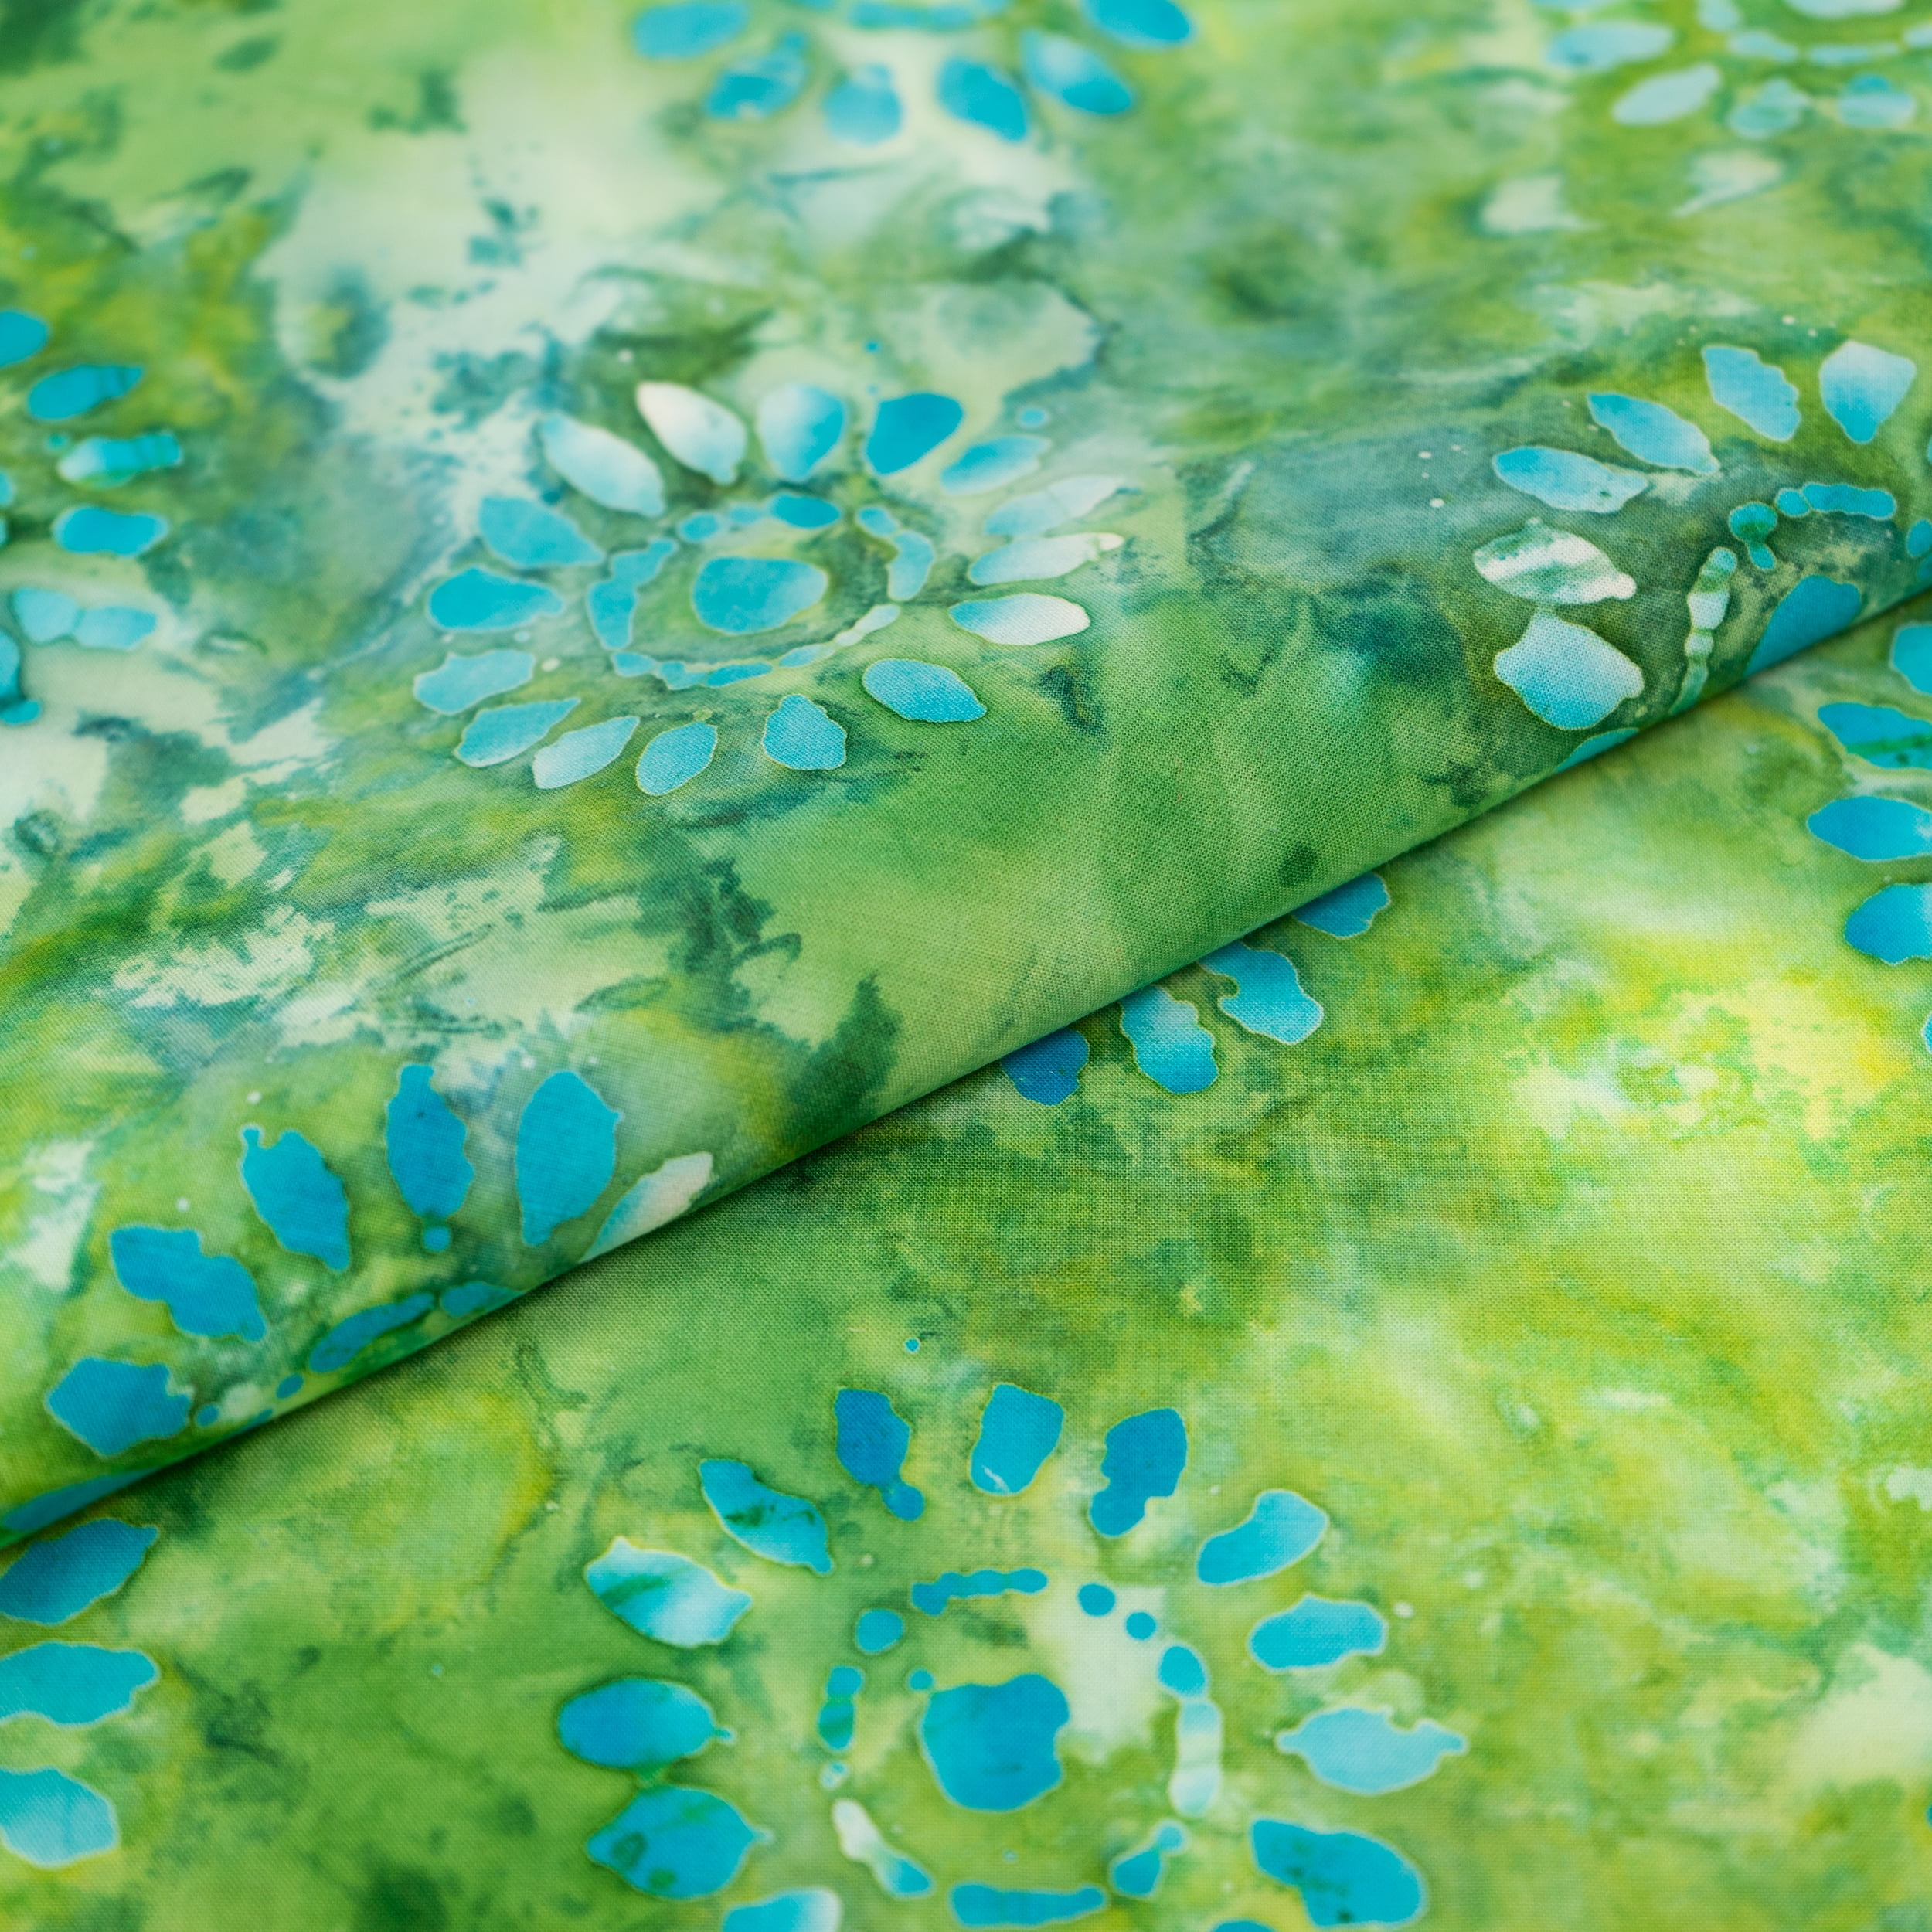 SINGER Fabric, 100% Cotton Print Batik, 5 Yards Cut, Blue Paisley